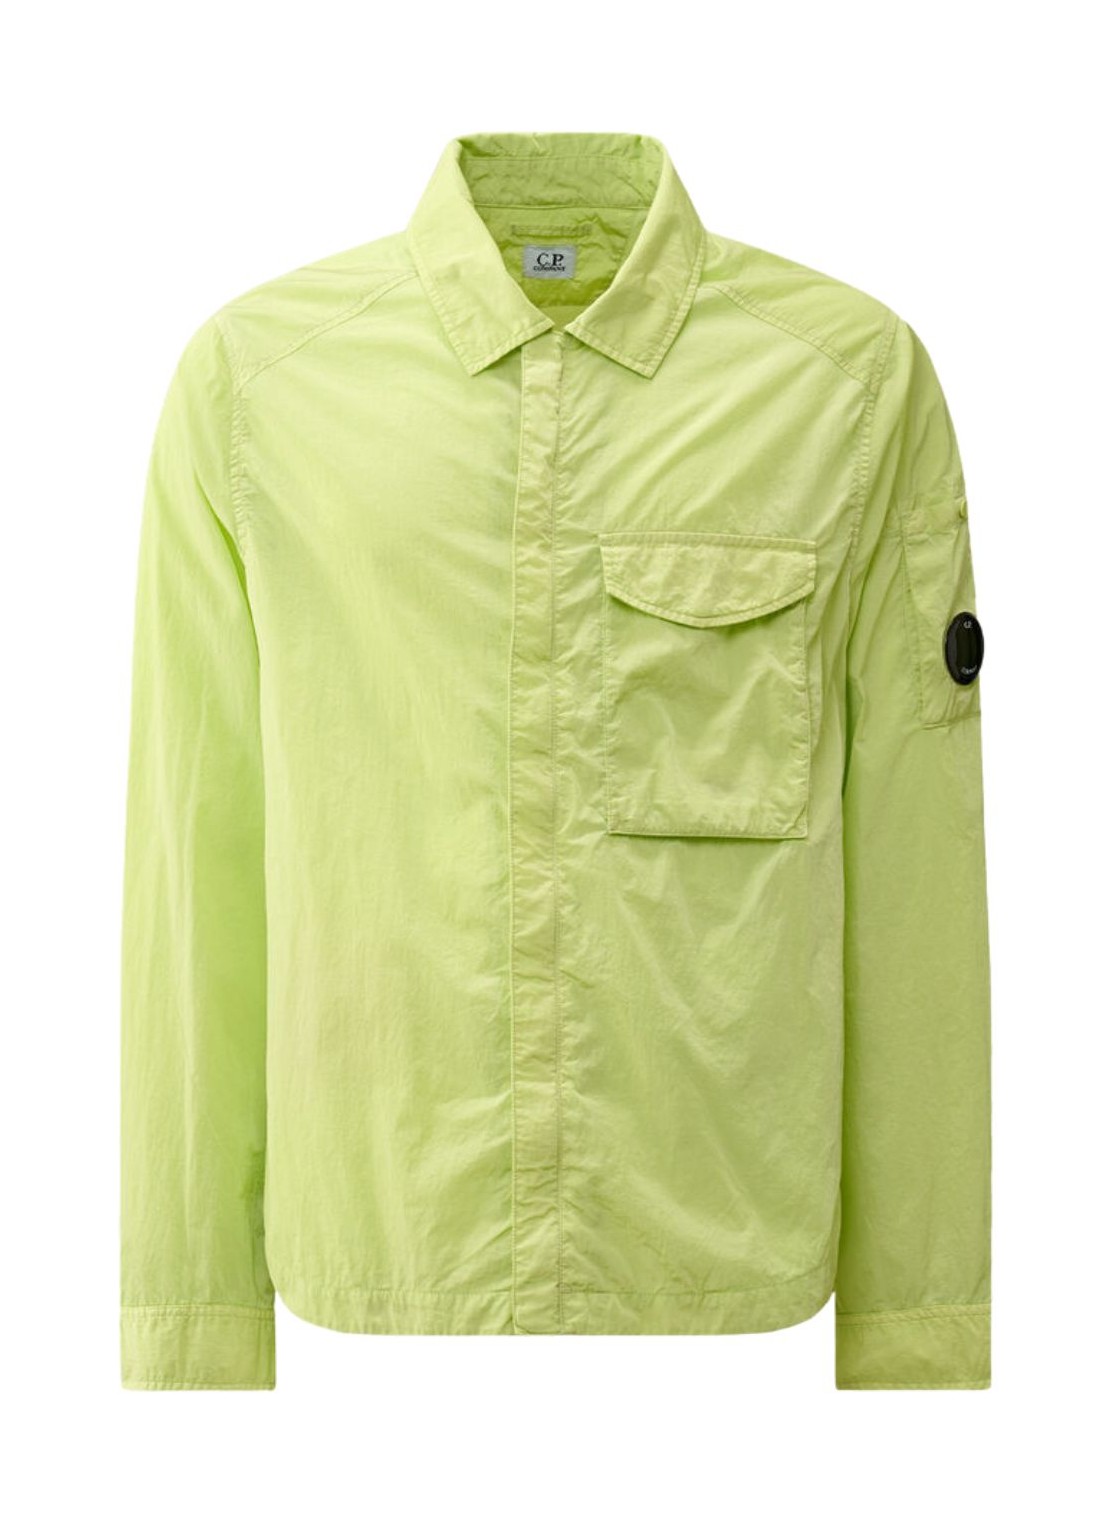 Outerwear c.p.company outerwear man chrome-r pocket overshirt 16cmos039a005904g 613 talla XXL
 